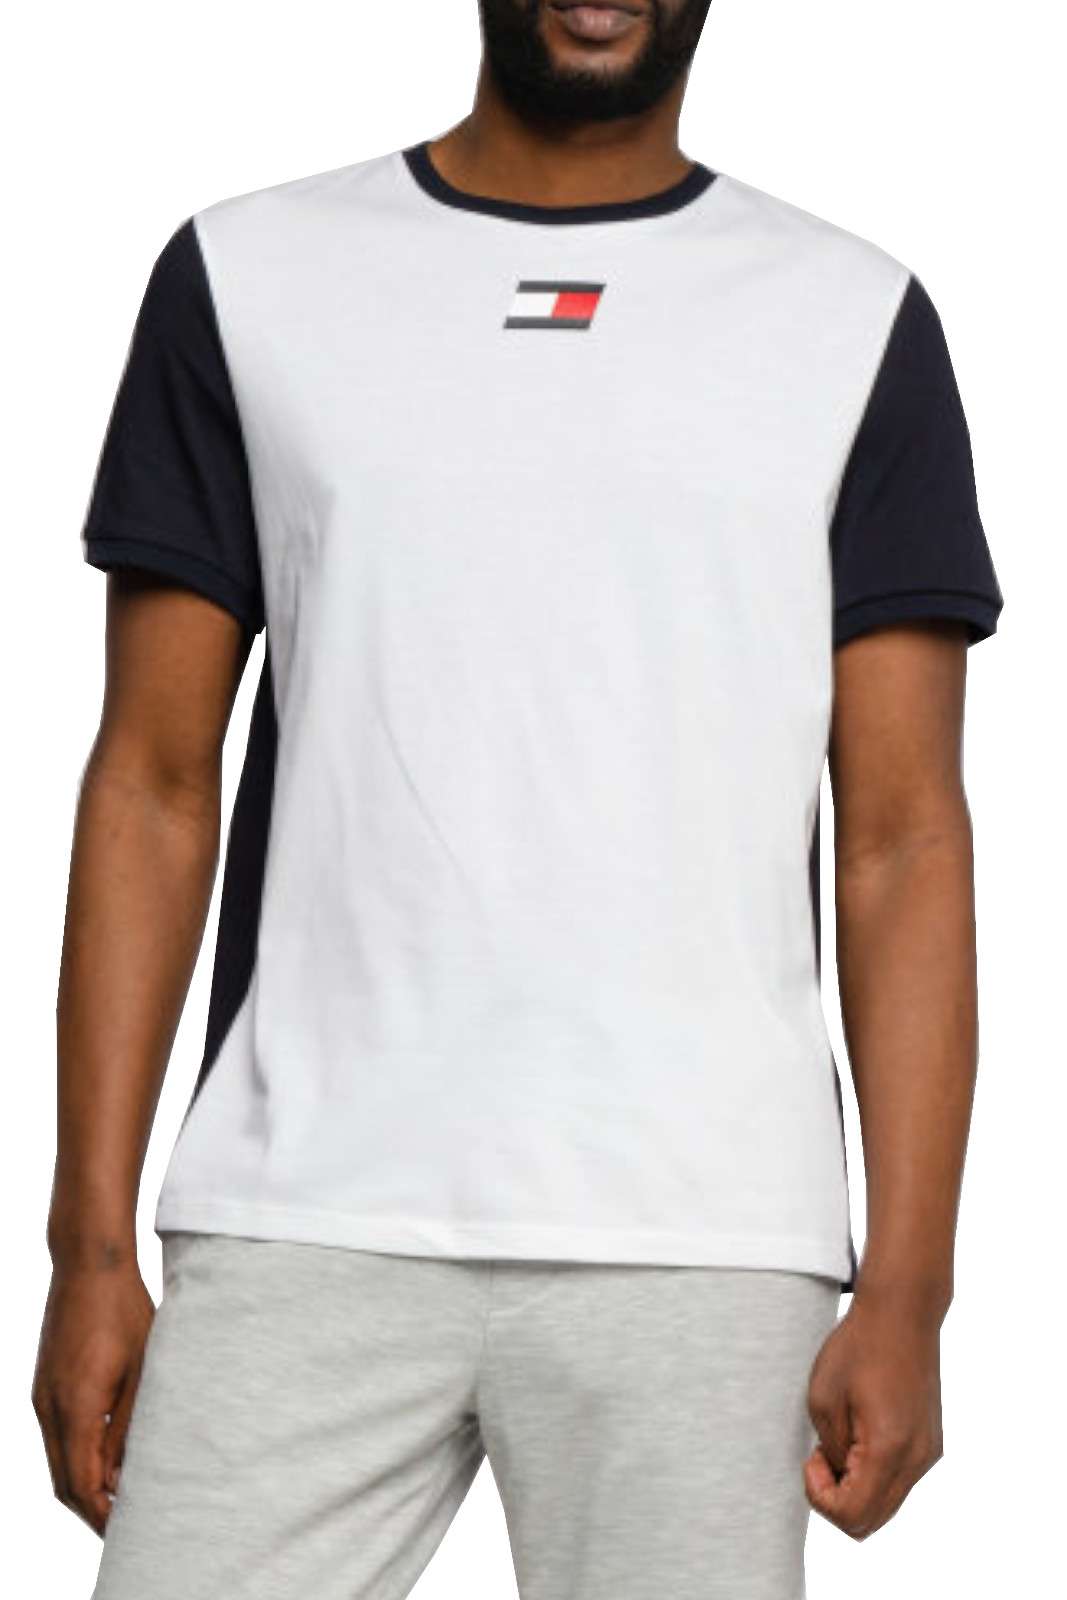 Tommy Hilfiger Men's sports T shirt